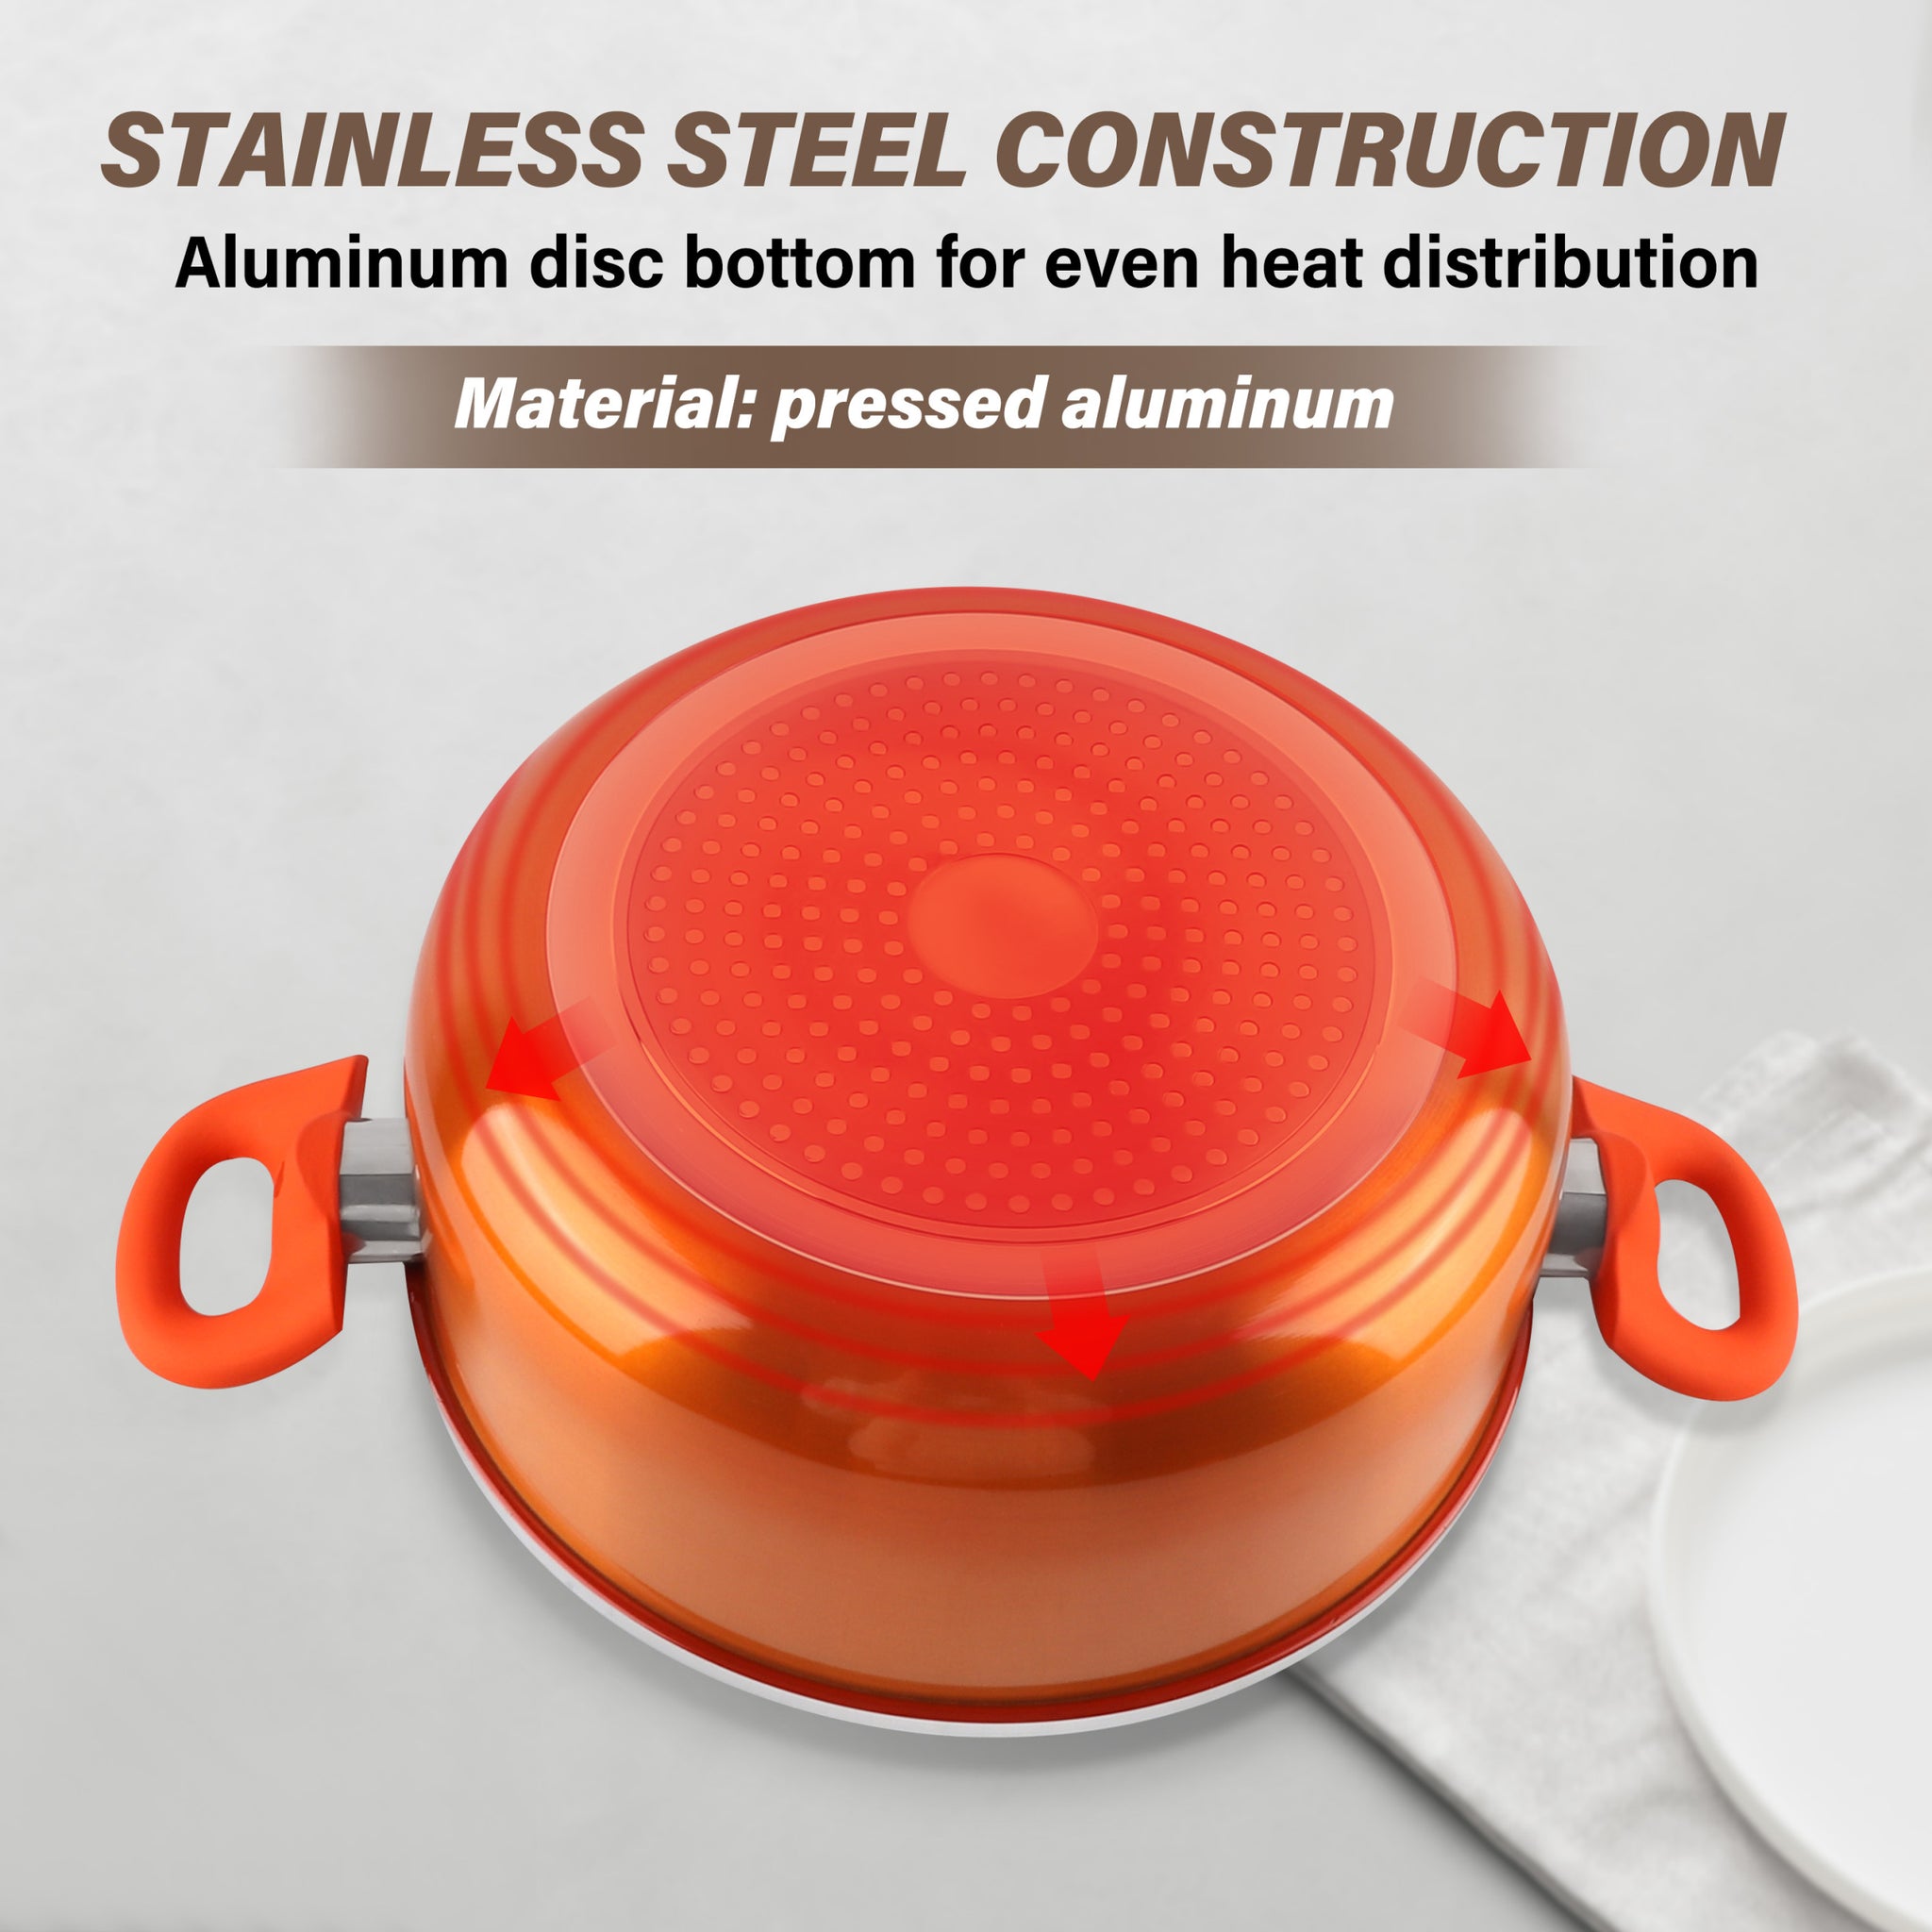 Stainless Steel 6 Piece Cookware Set: Mirror Polished orange-kitchen-aluminium